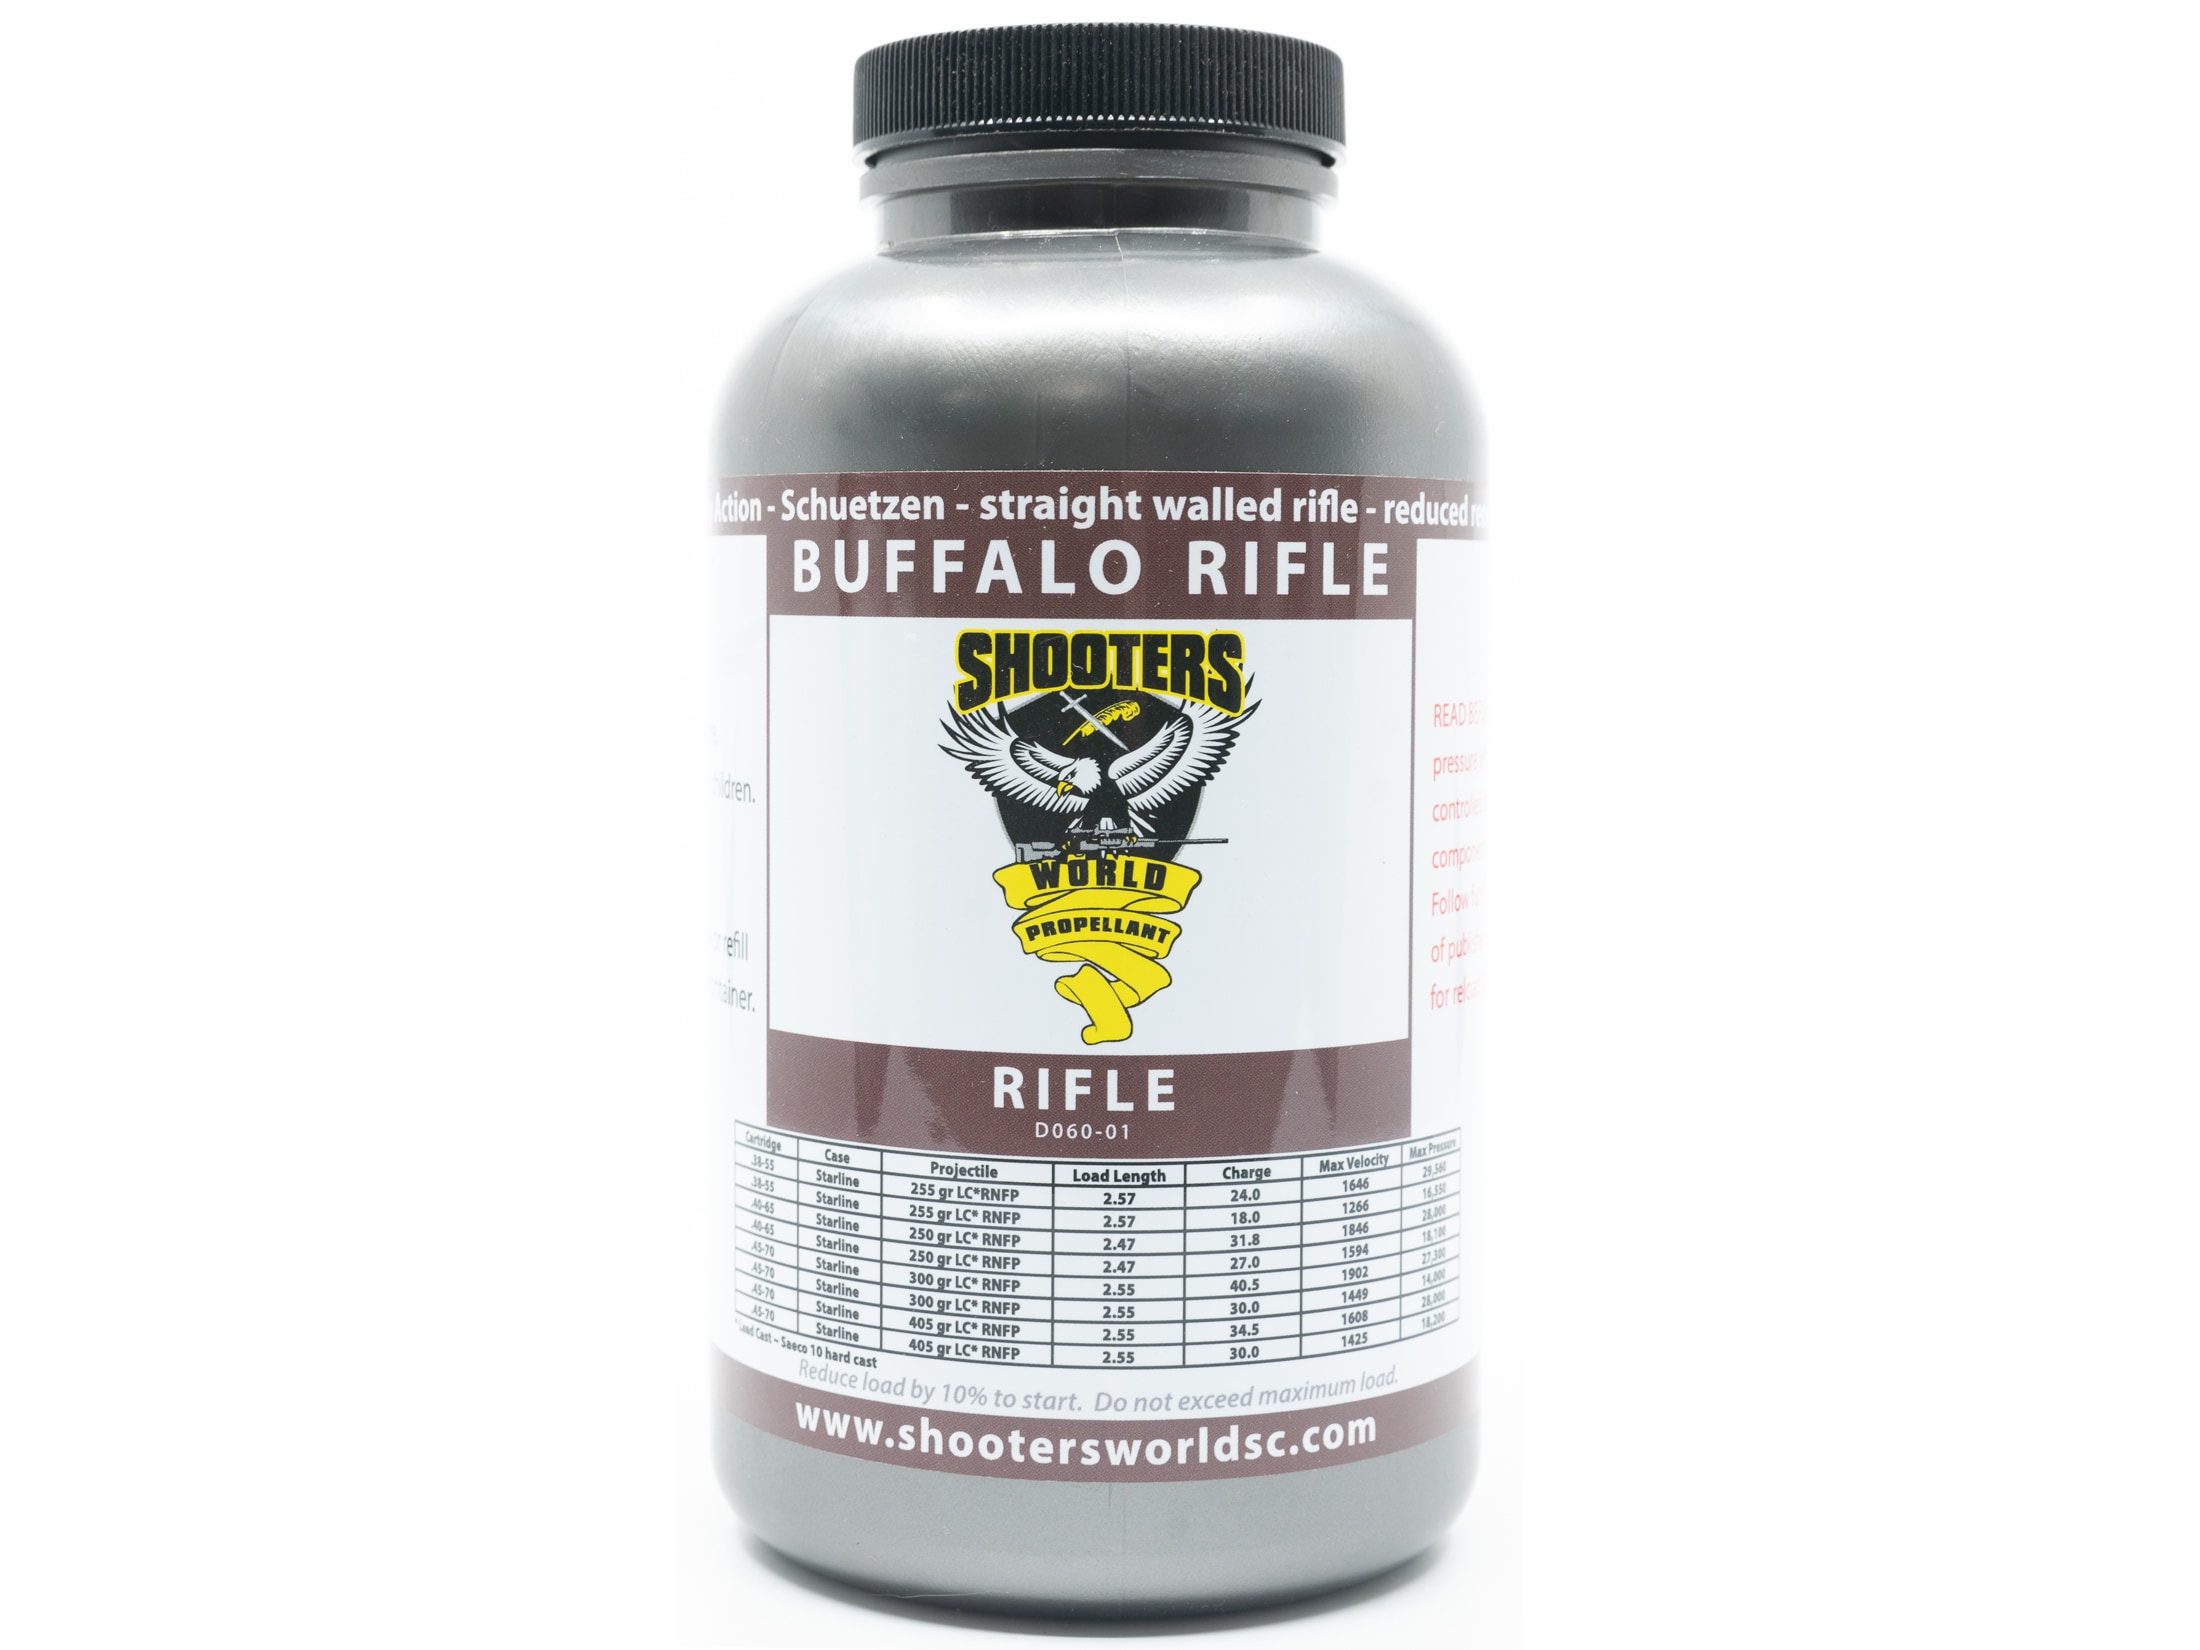 Shooters World Buffalo Rifle D060-01 Smokeless Gun Powder